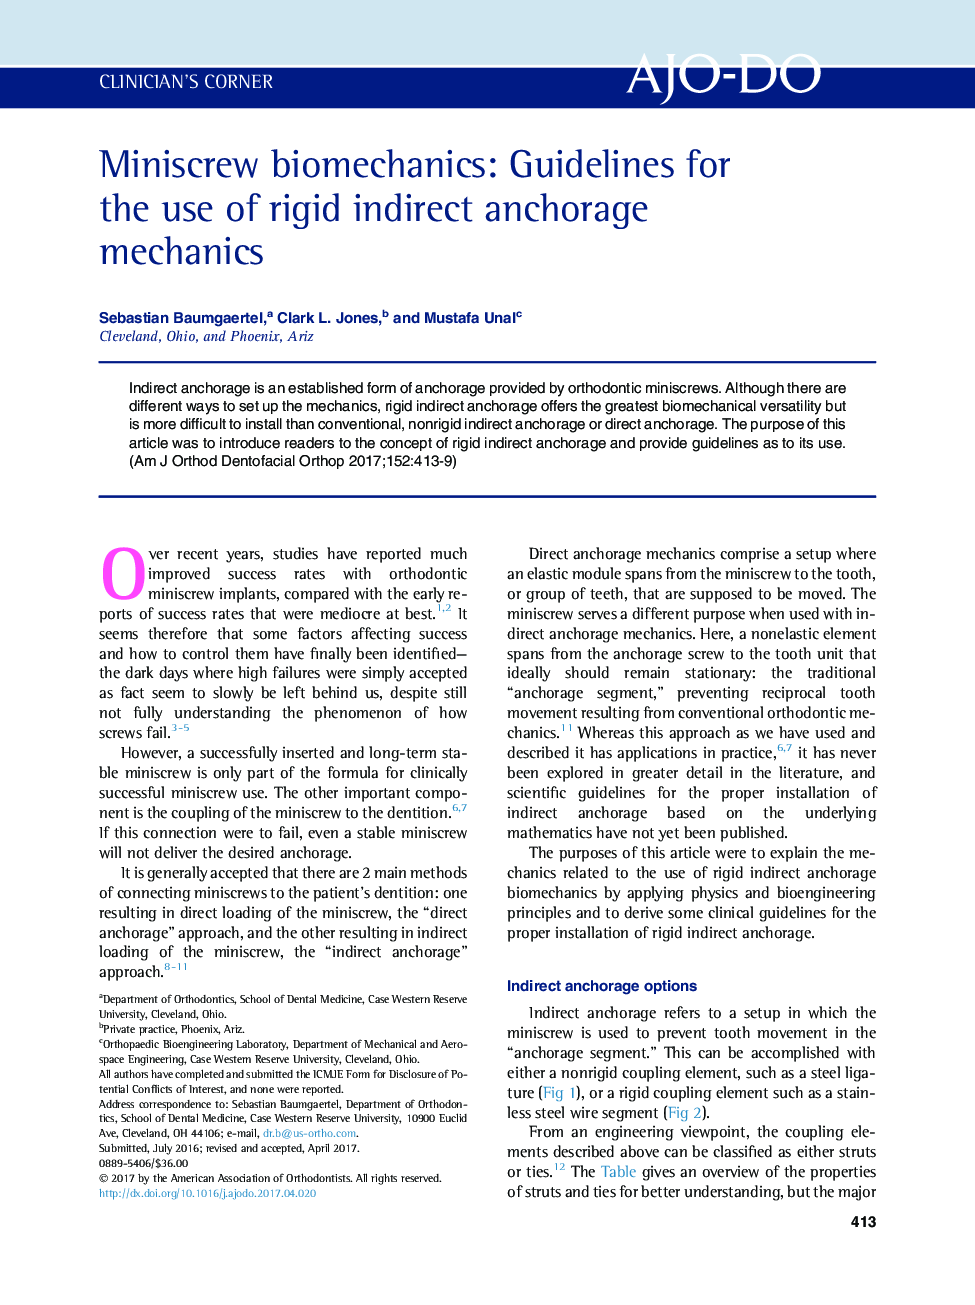 Miniscrew biomechanics: Guidelines for the use of rigid indirect anchorage mechanics